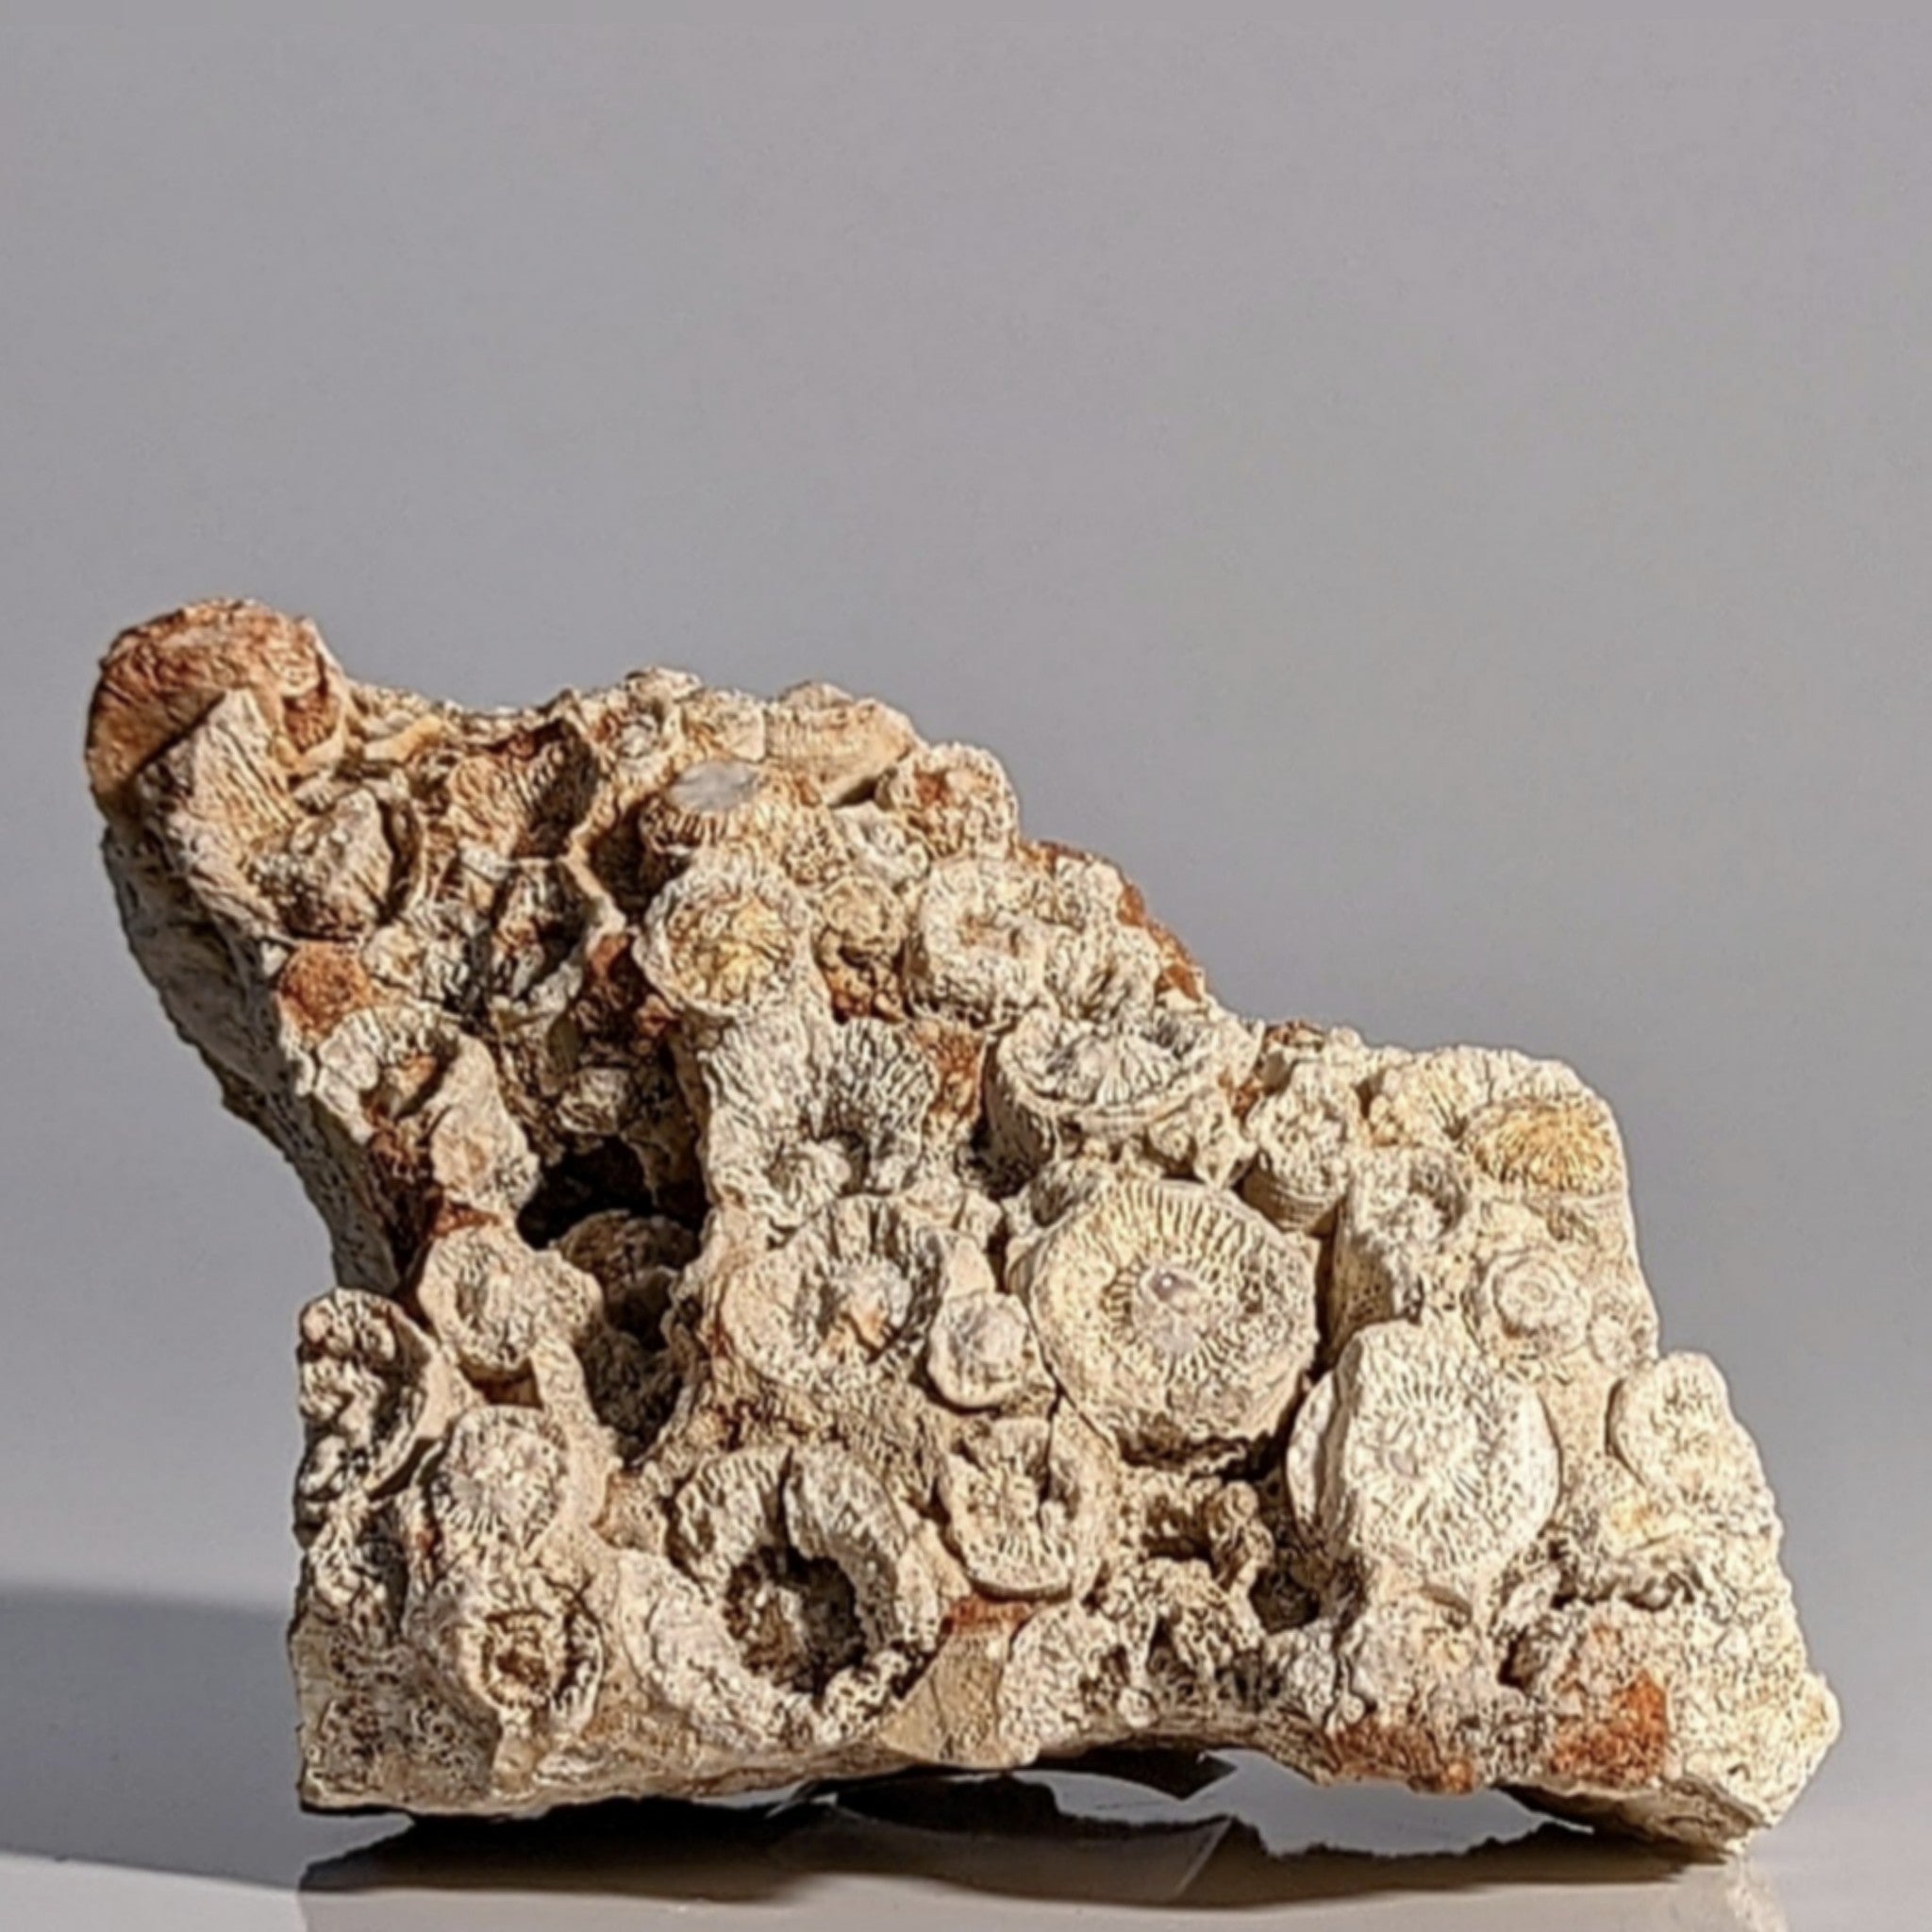 Fossilized Coral Specimen